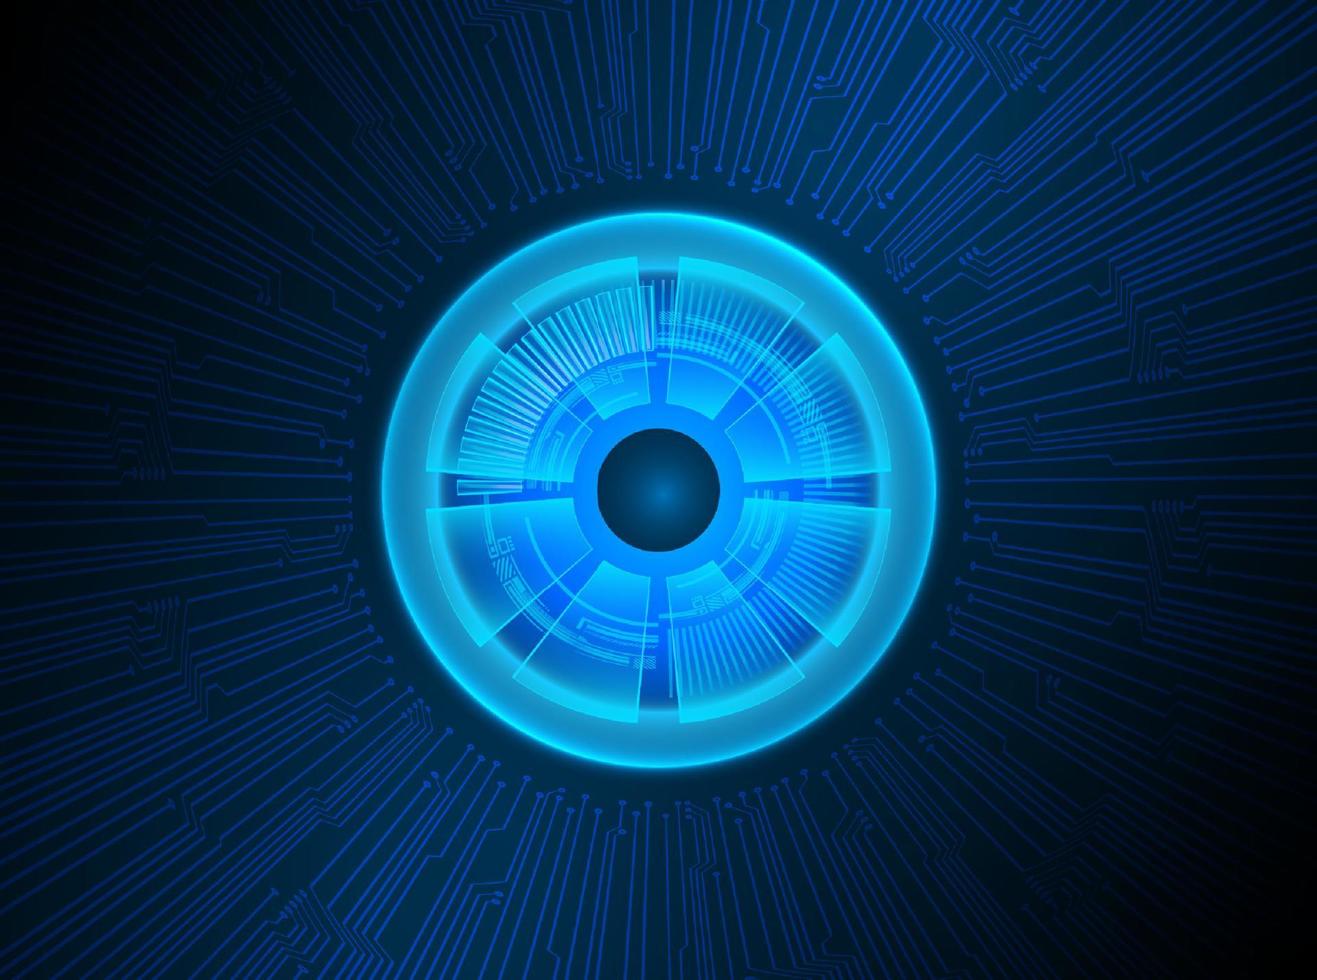 modern holografische oog bal Aan technologie achtergrond vector